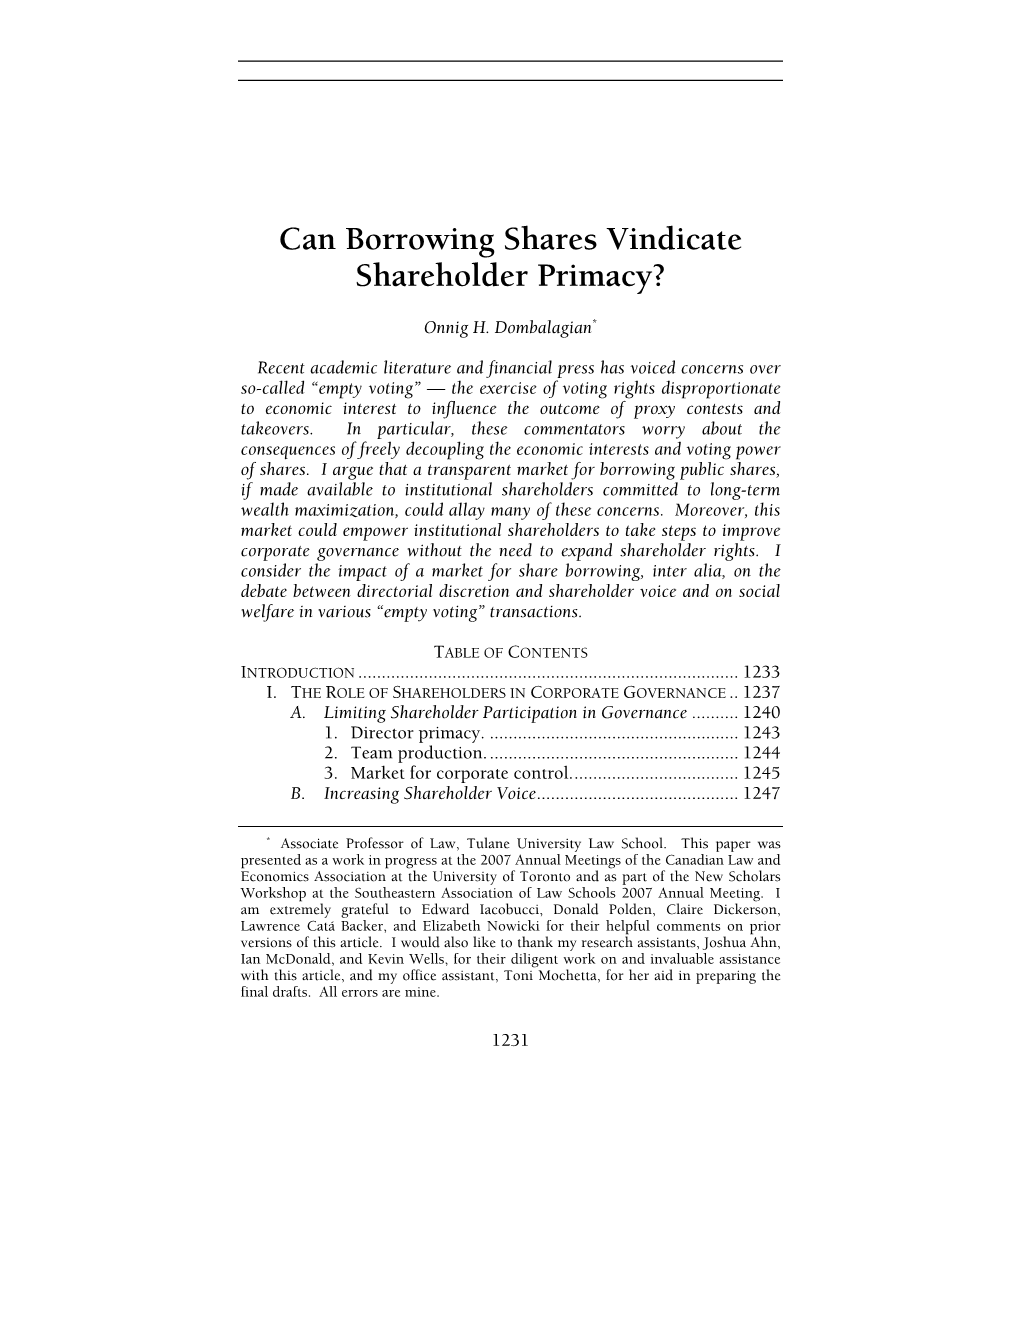 Can Borrowing Shares Vindicate Shareholder Primacy?